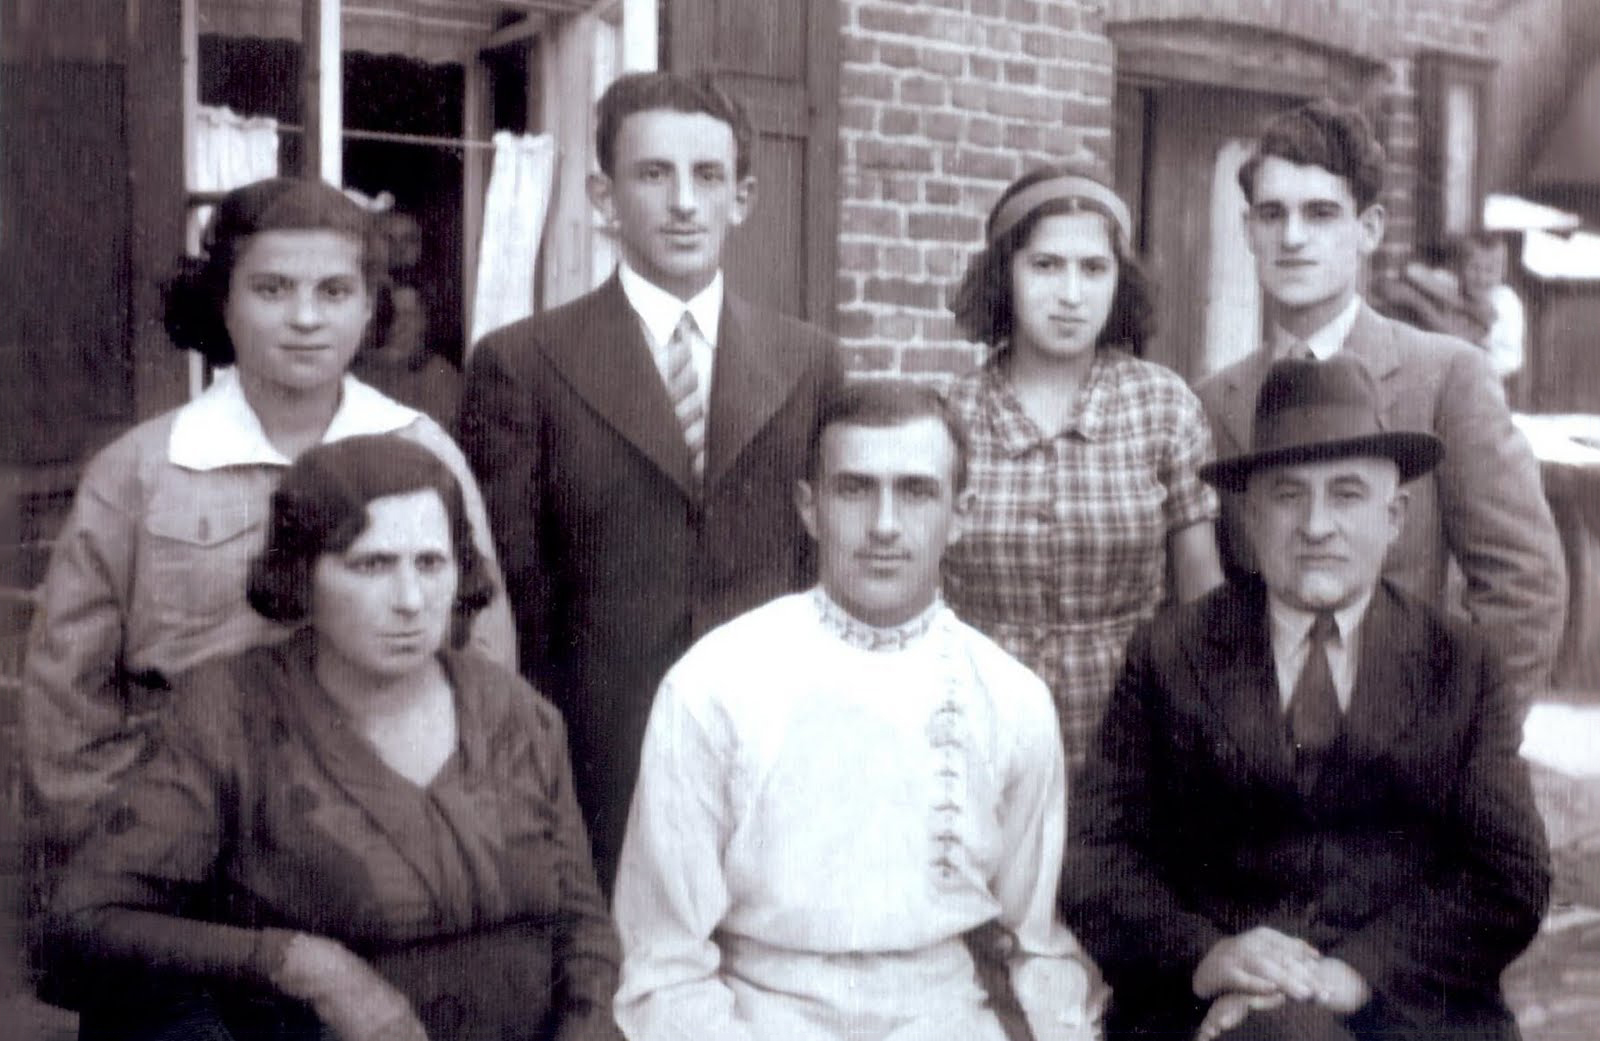 Discovering Lost Family via the Yad Vashem Database